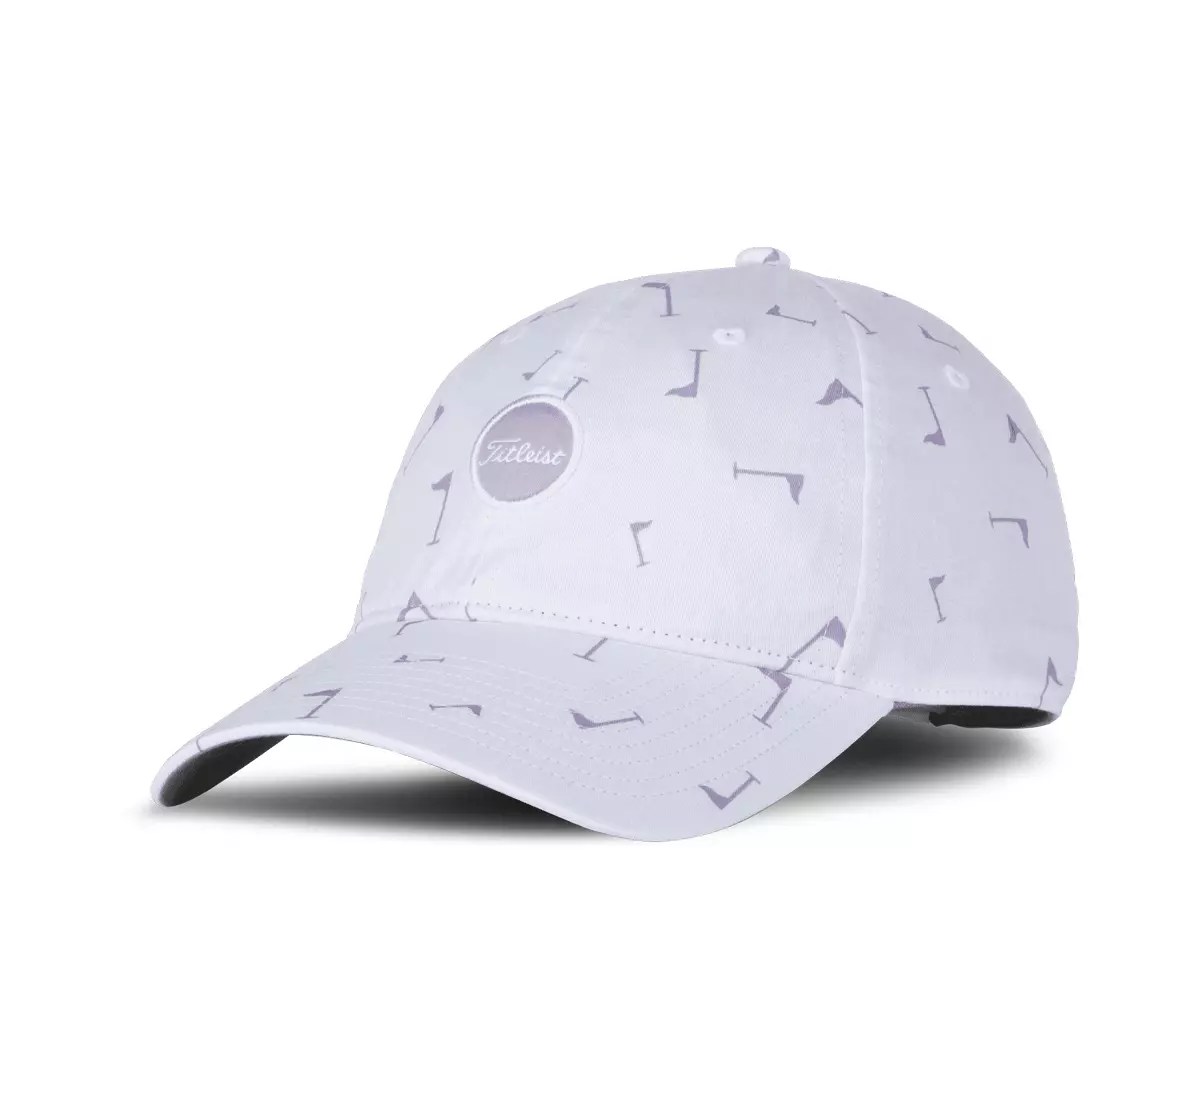 Titleist Women’s Montauk Breezer Hat: $30.00